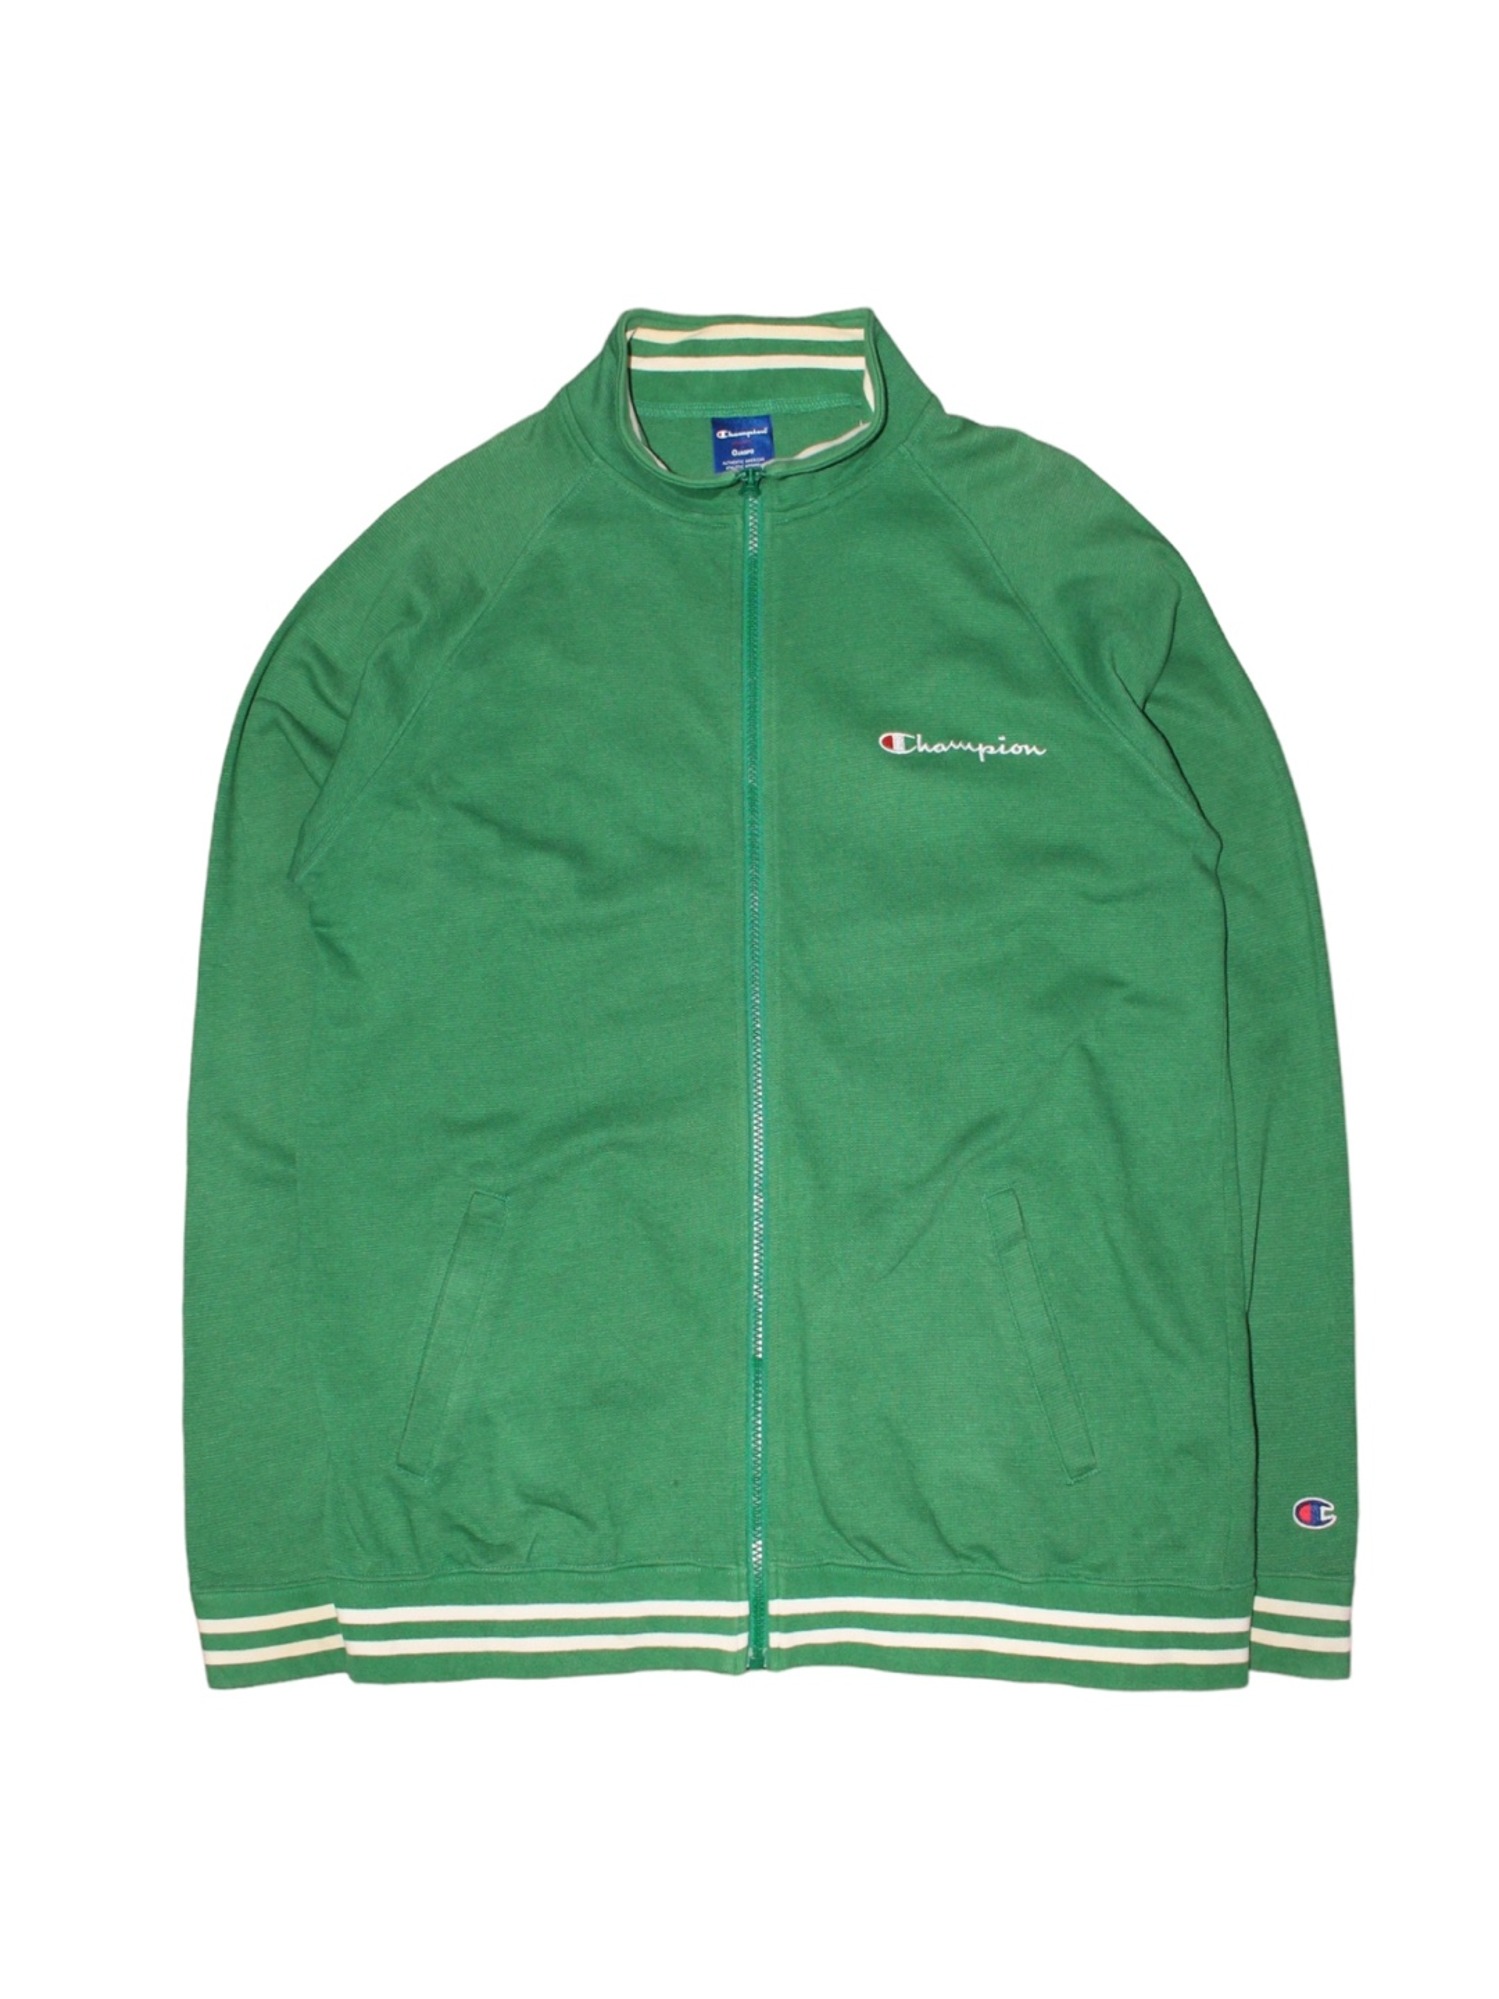 Champion Cotton Jersey (Green)